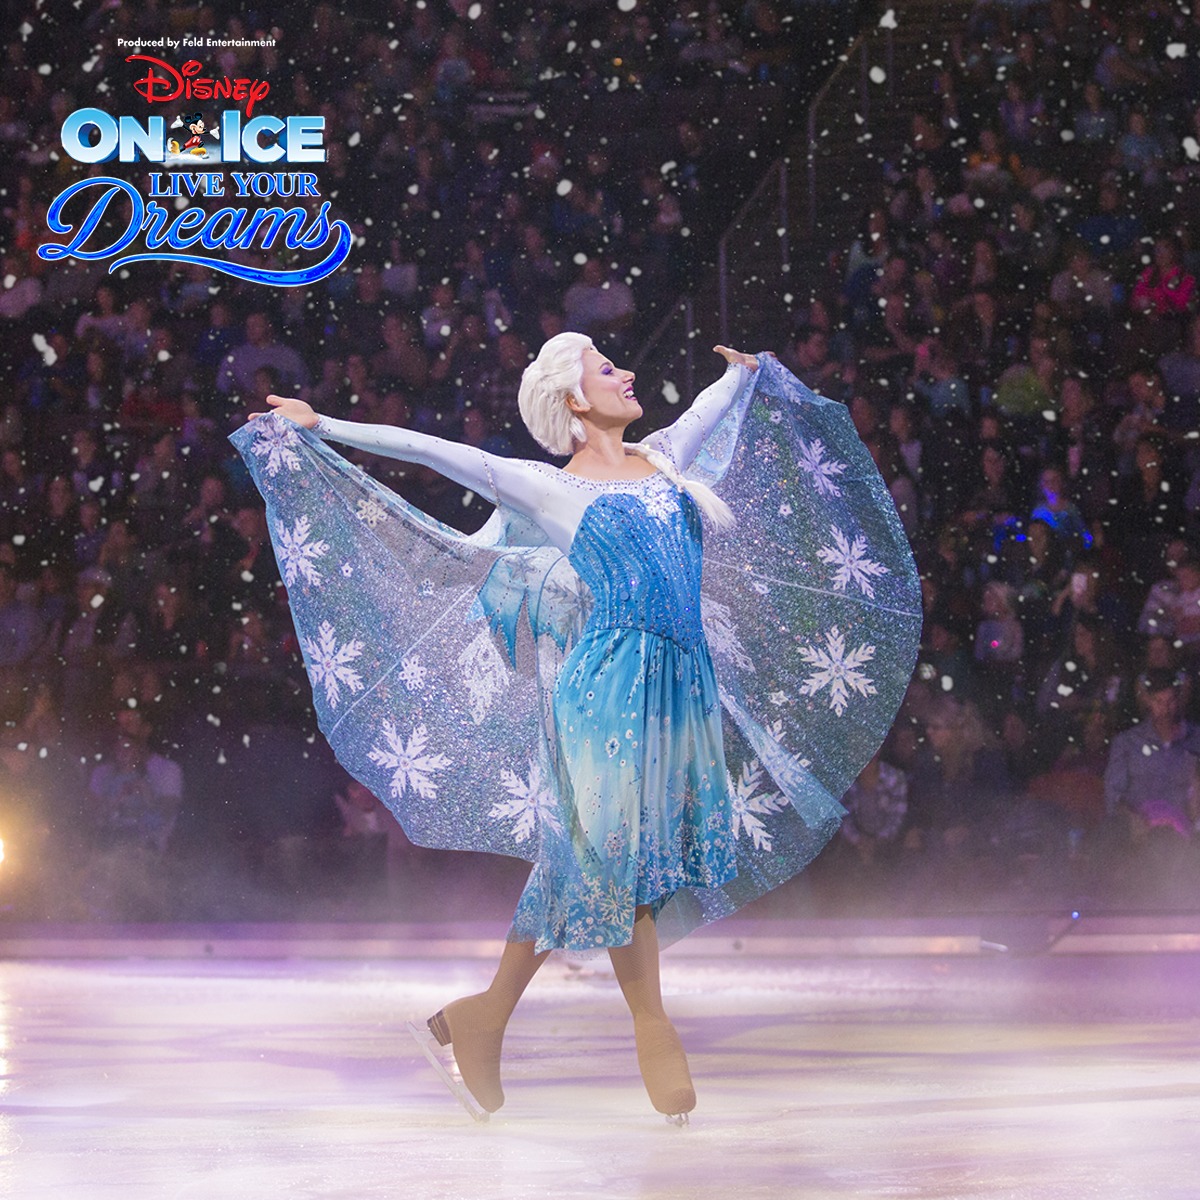 Ajak Anak Berani Wujudkan Mimpi di Disney On Ice Live Your Dreams